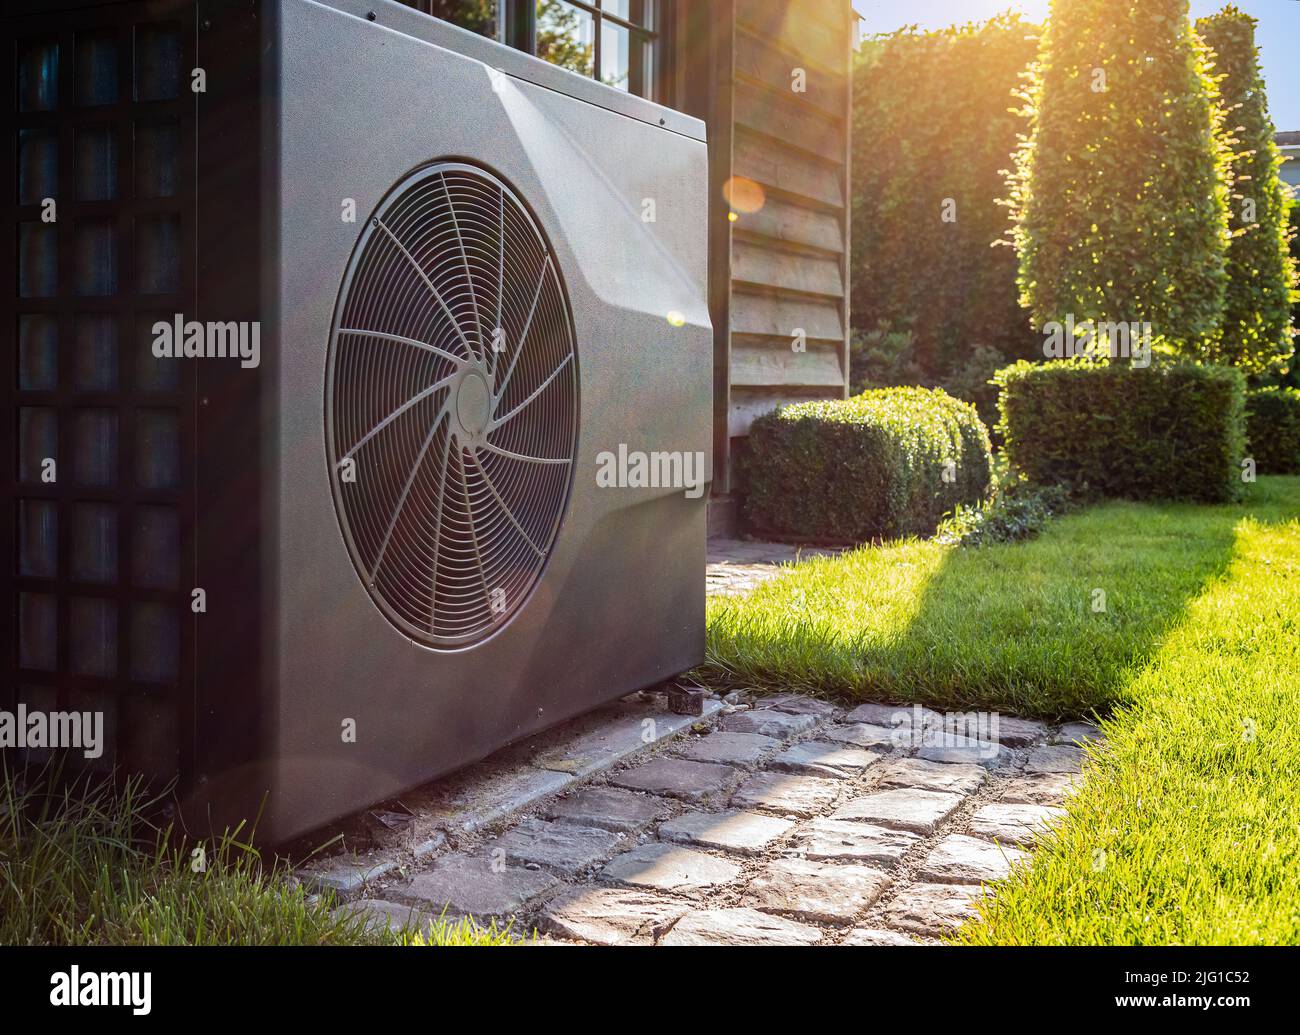 Air heat pump near pool house outdoors. Stock Photo